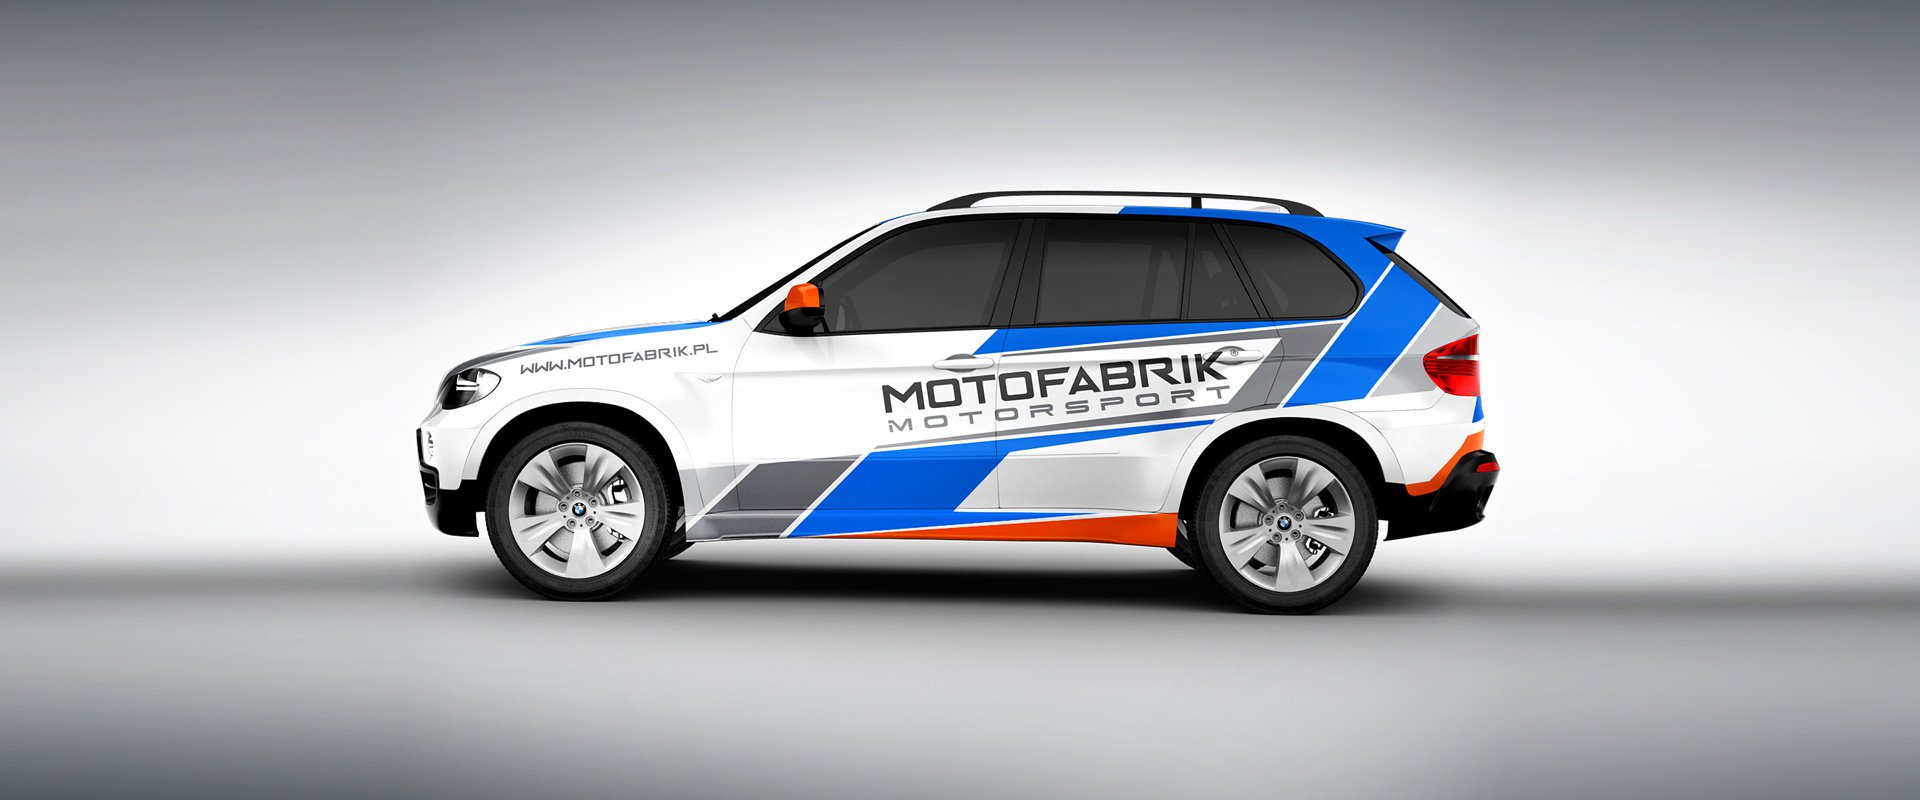 MotoFabrik Motorsport #2